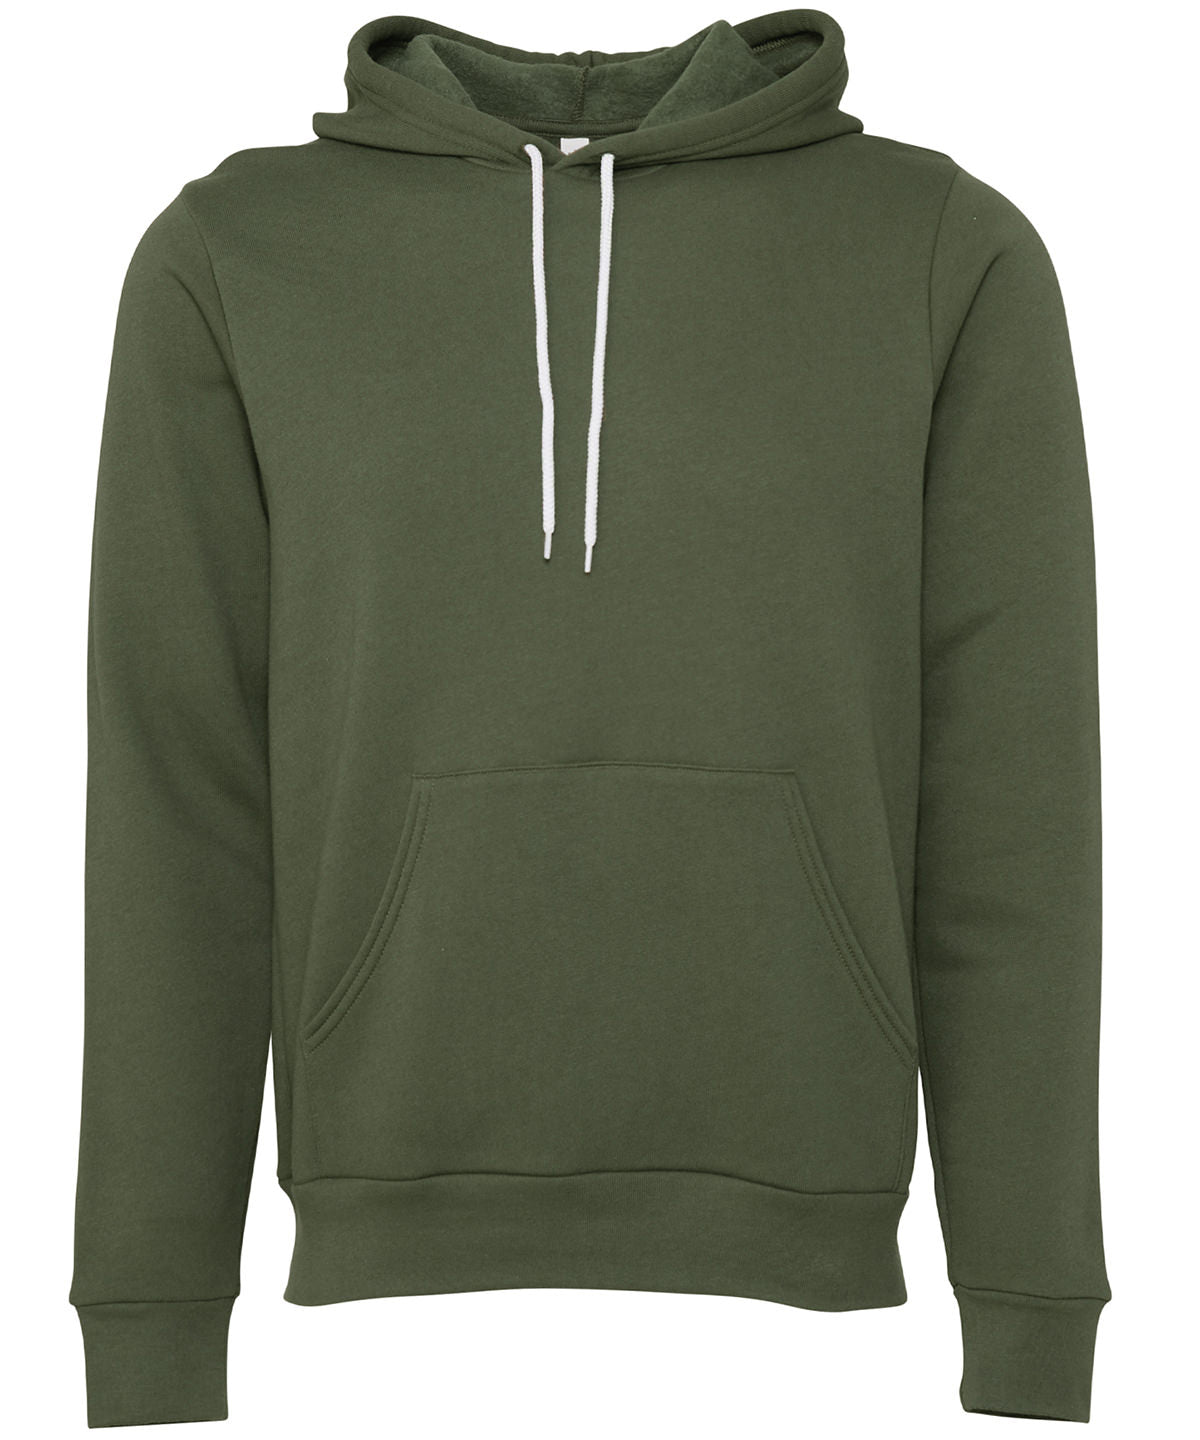 Personalised Hoodies - Royal Bella Canvas Unisex polycotton fleece pullover hoodie